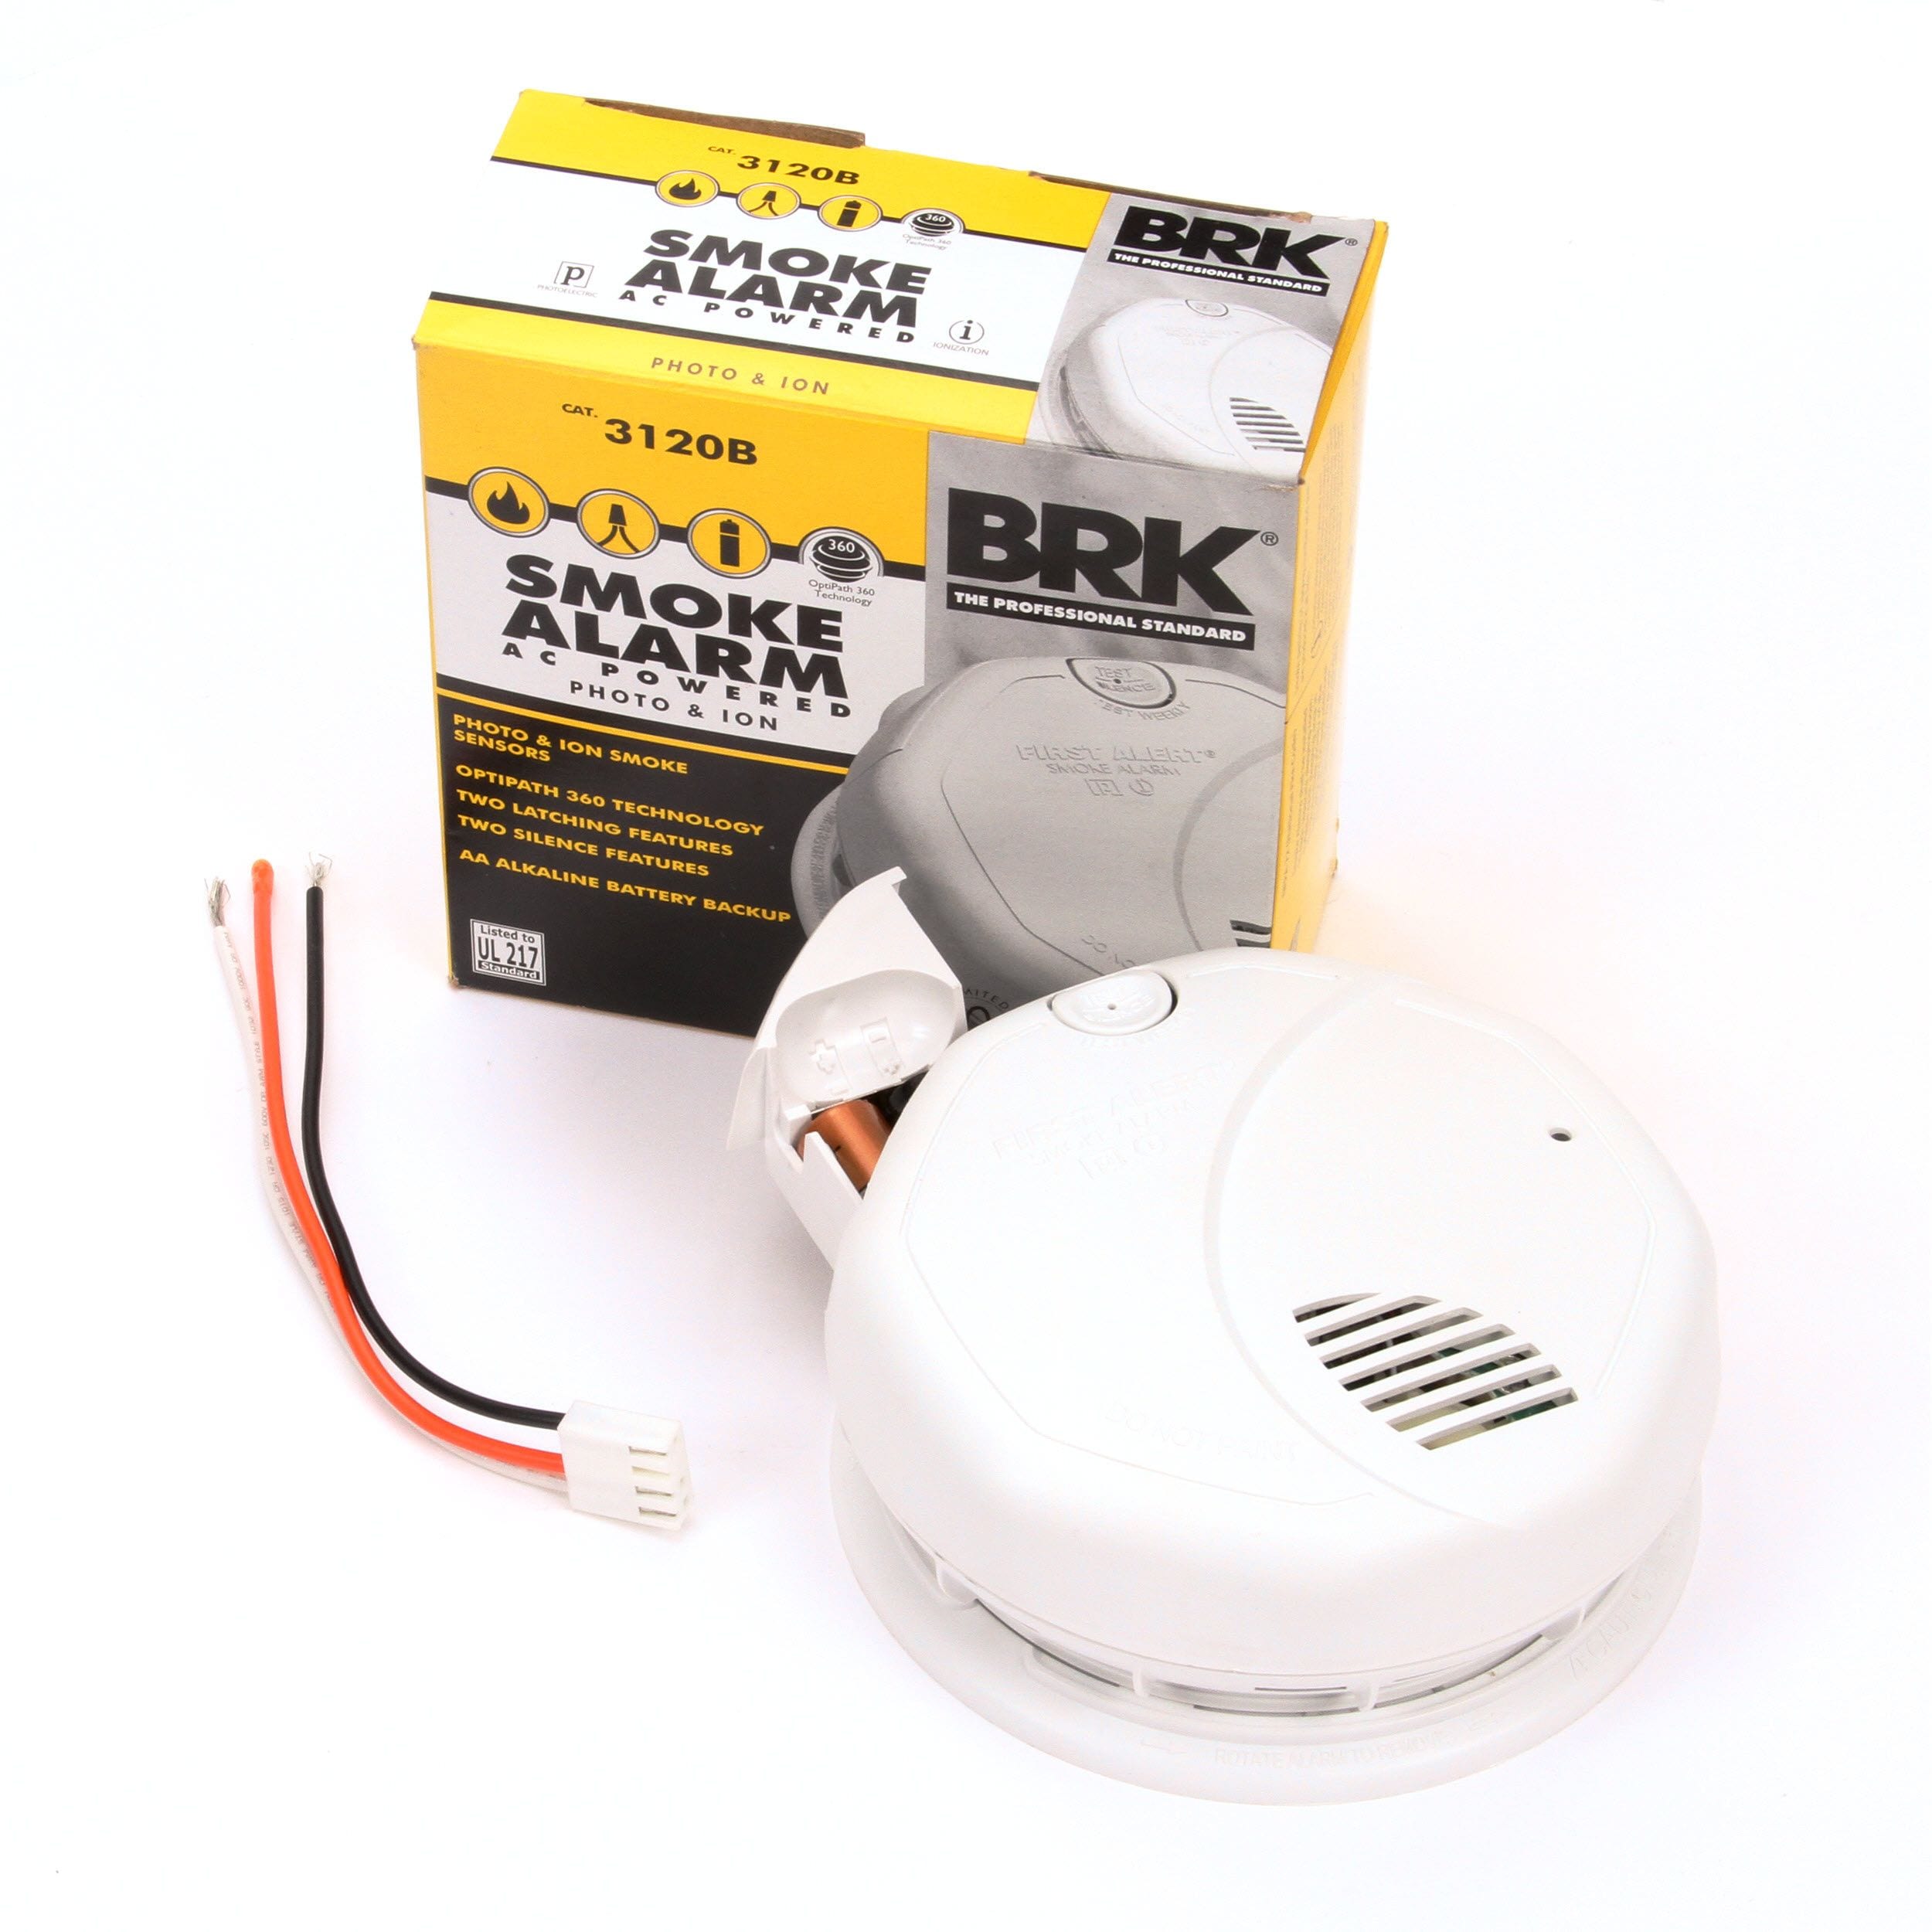 BRK Smoke Alarm AC Powered Photo & Ion Smoke Sensors Item# CAT3120B 